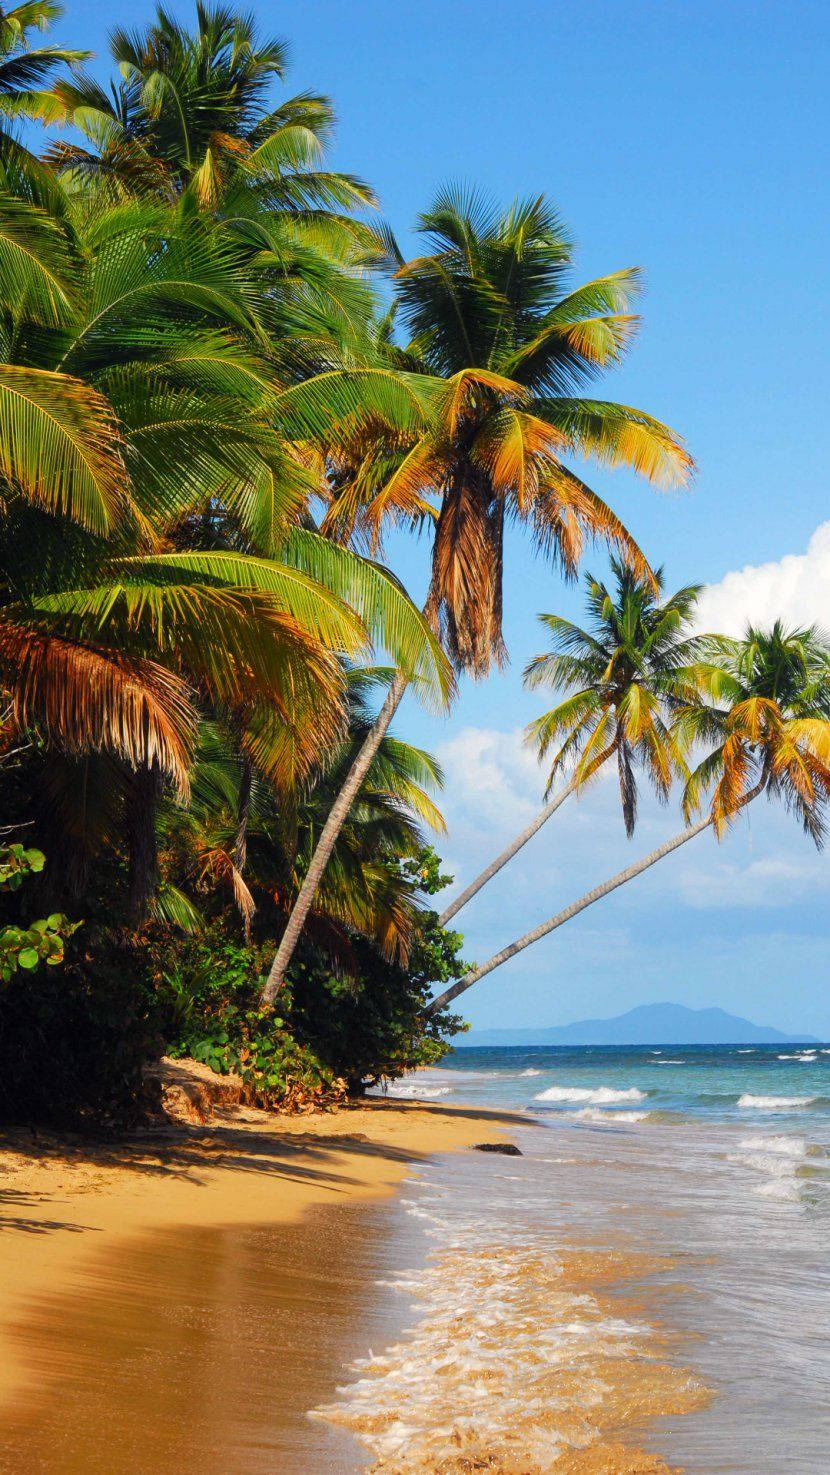 Beach 4k Iphone Bending Coconut Trees